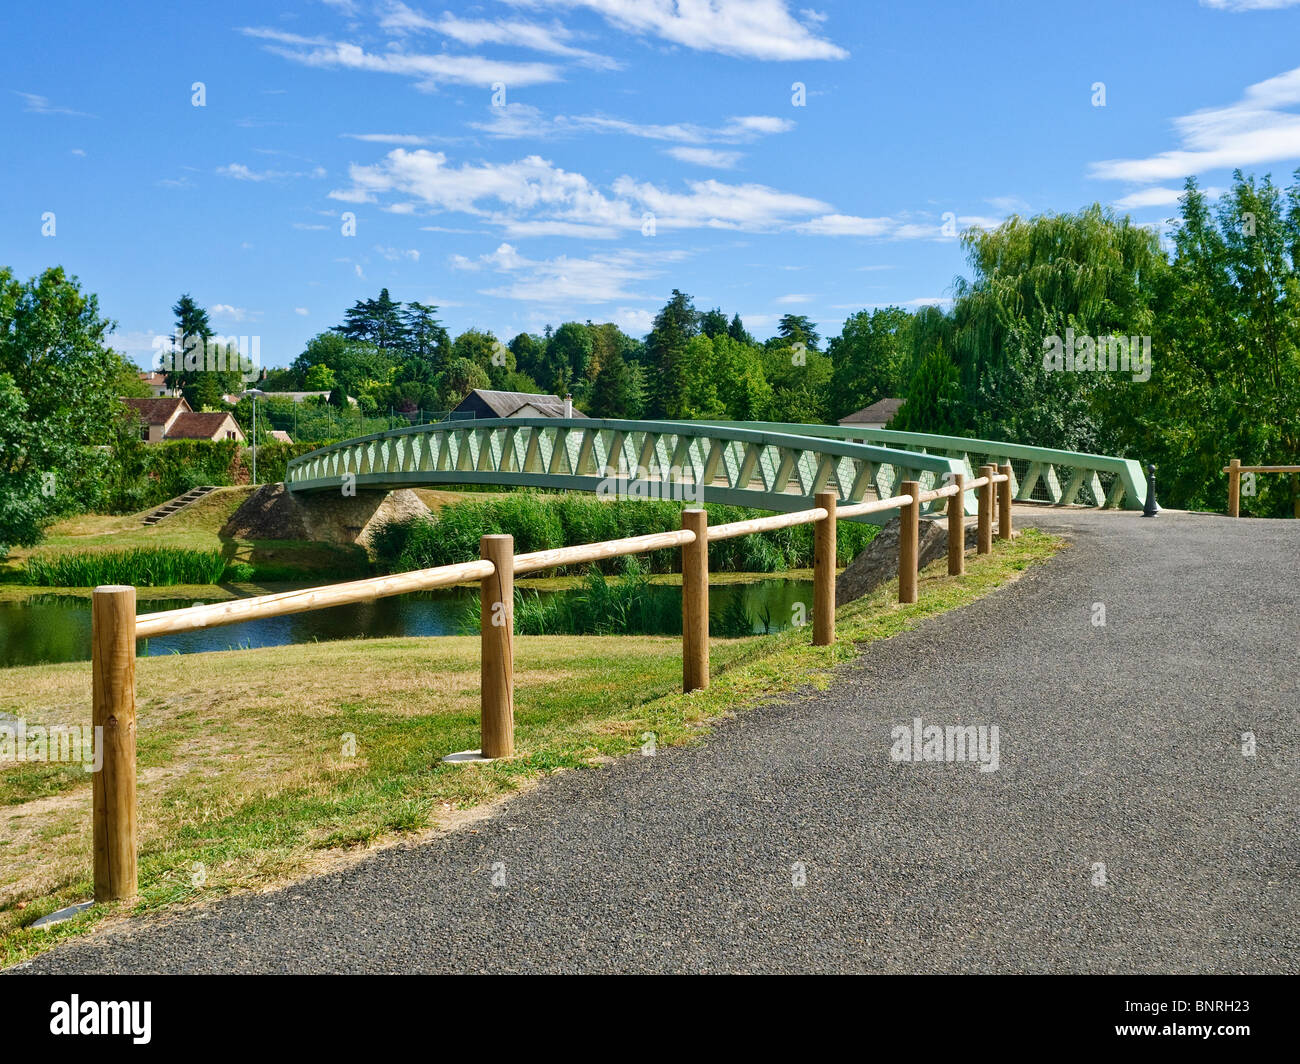 Metallo moderno unico span arch ponte sul fiume - Preuilly-sur-Claise, Francia. Foto Stock